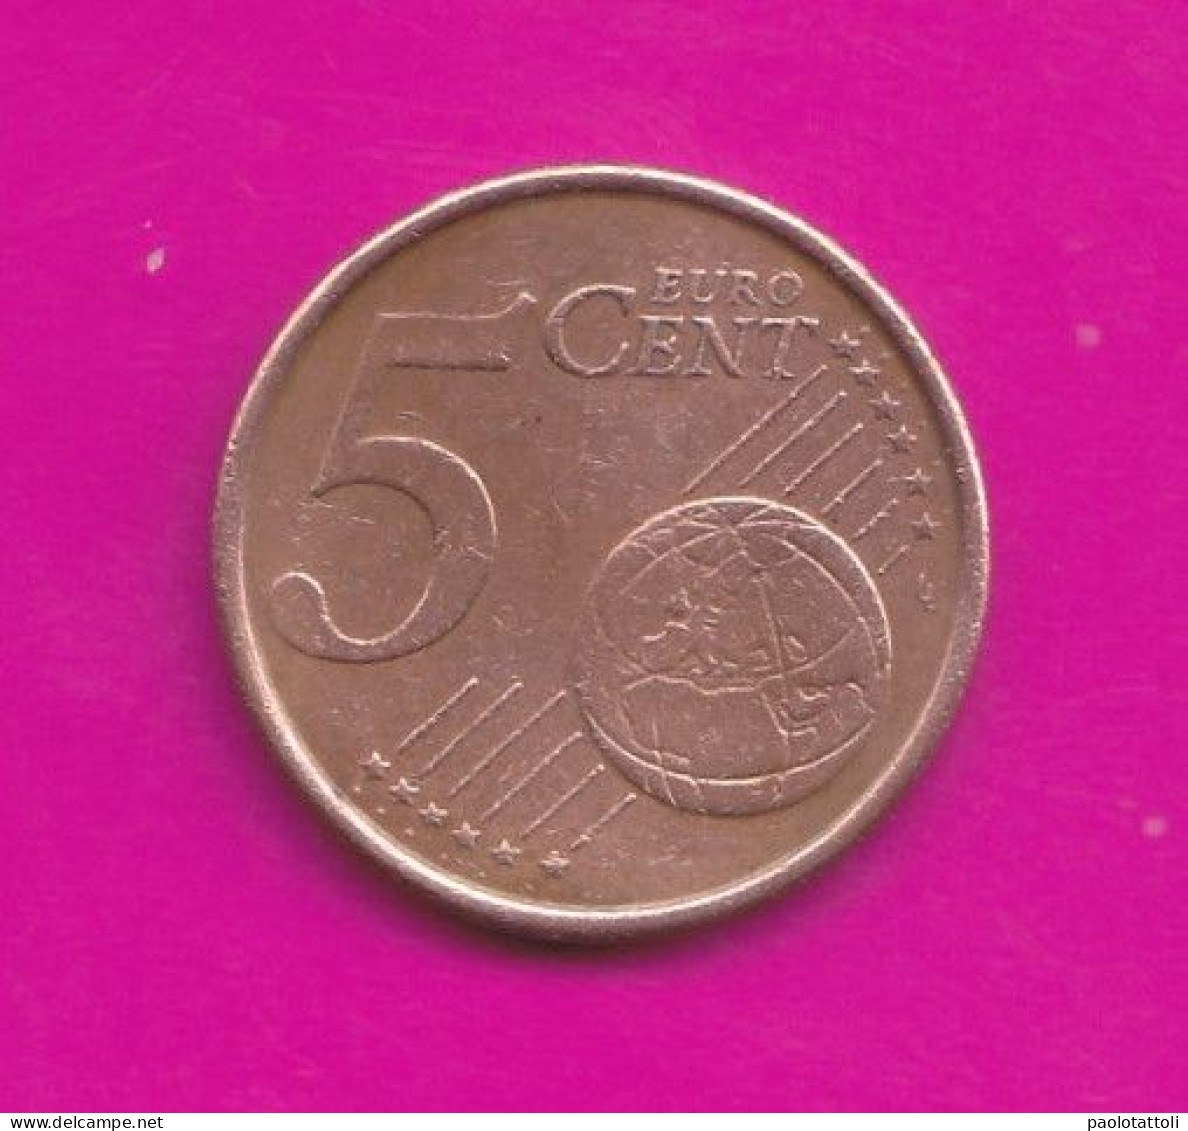 Spain, 1999- 5 Euro Cent- Copper Plated Steel- Obverse Cathedral Of Santiago De Campostela. Reverse Denomination - Spain